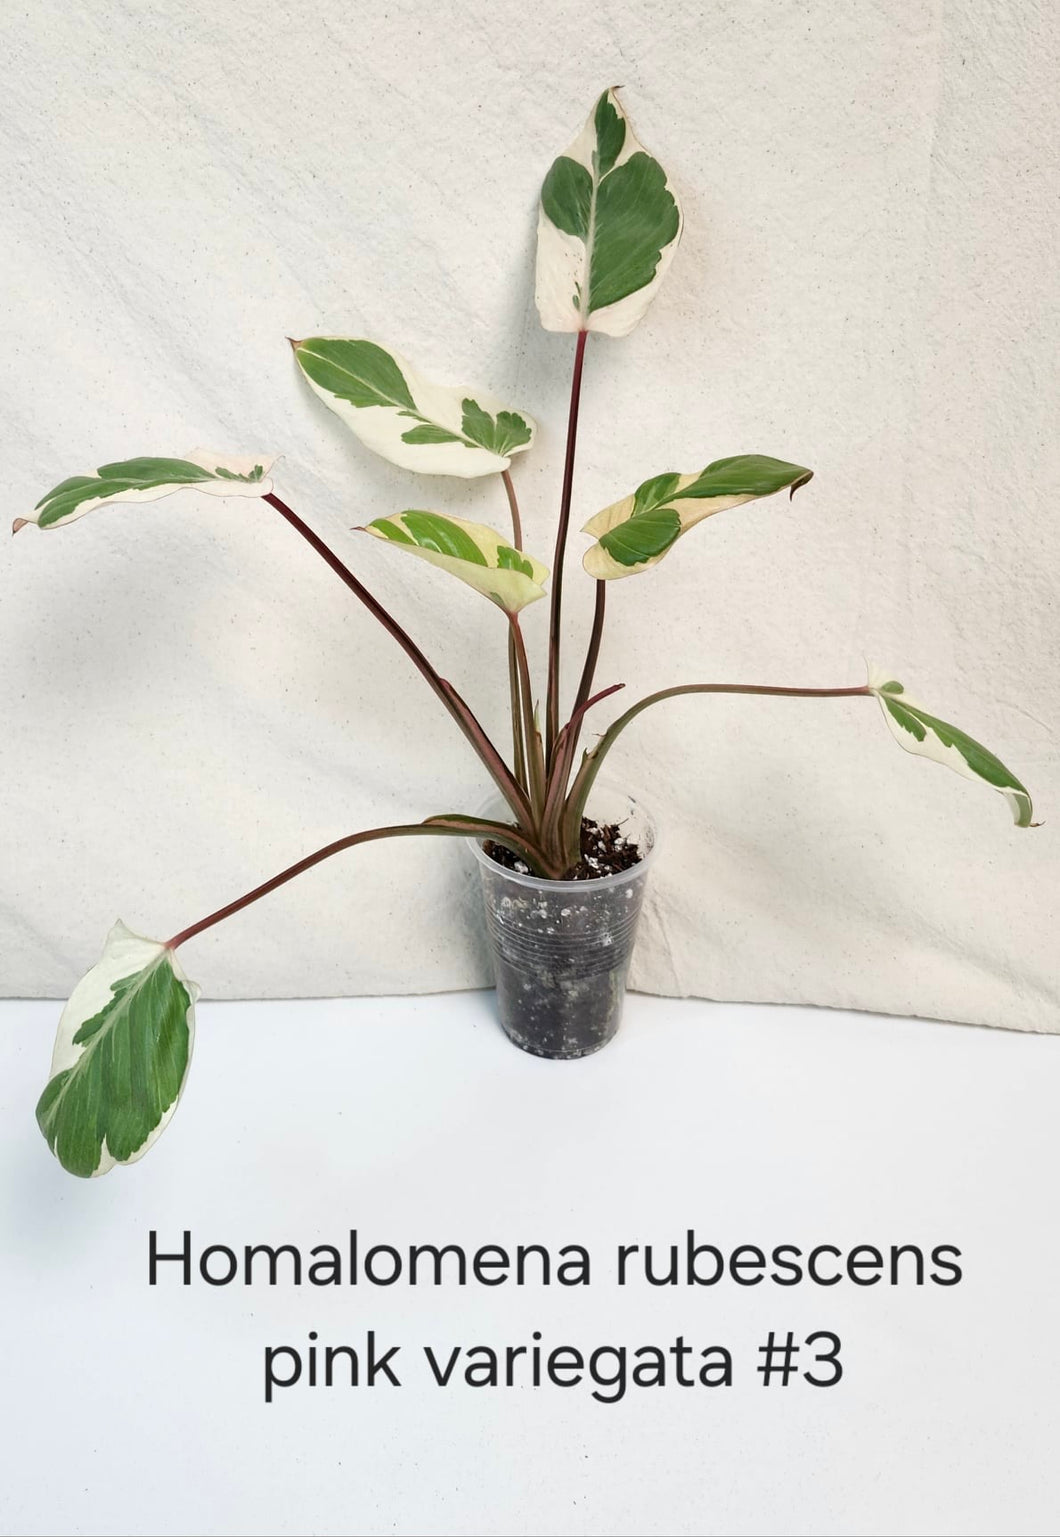 Homalonema rubescens pink mutation variegata #3